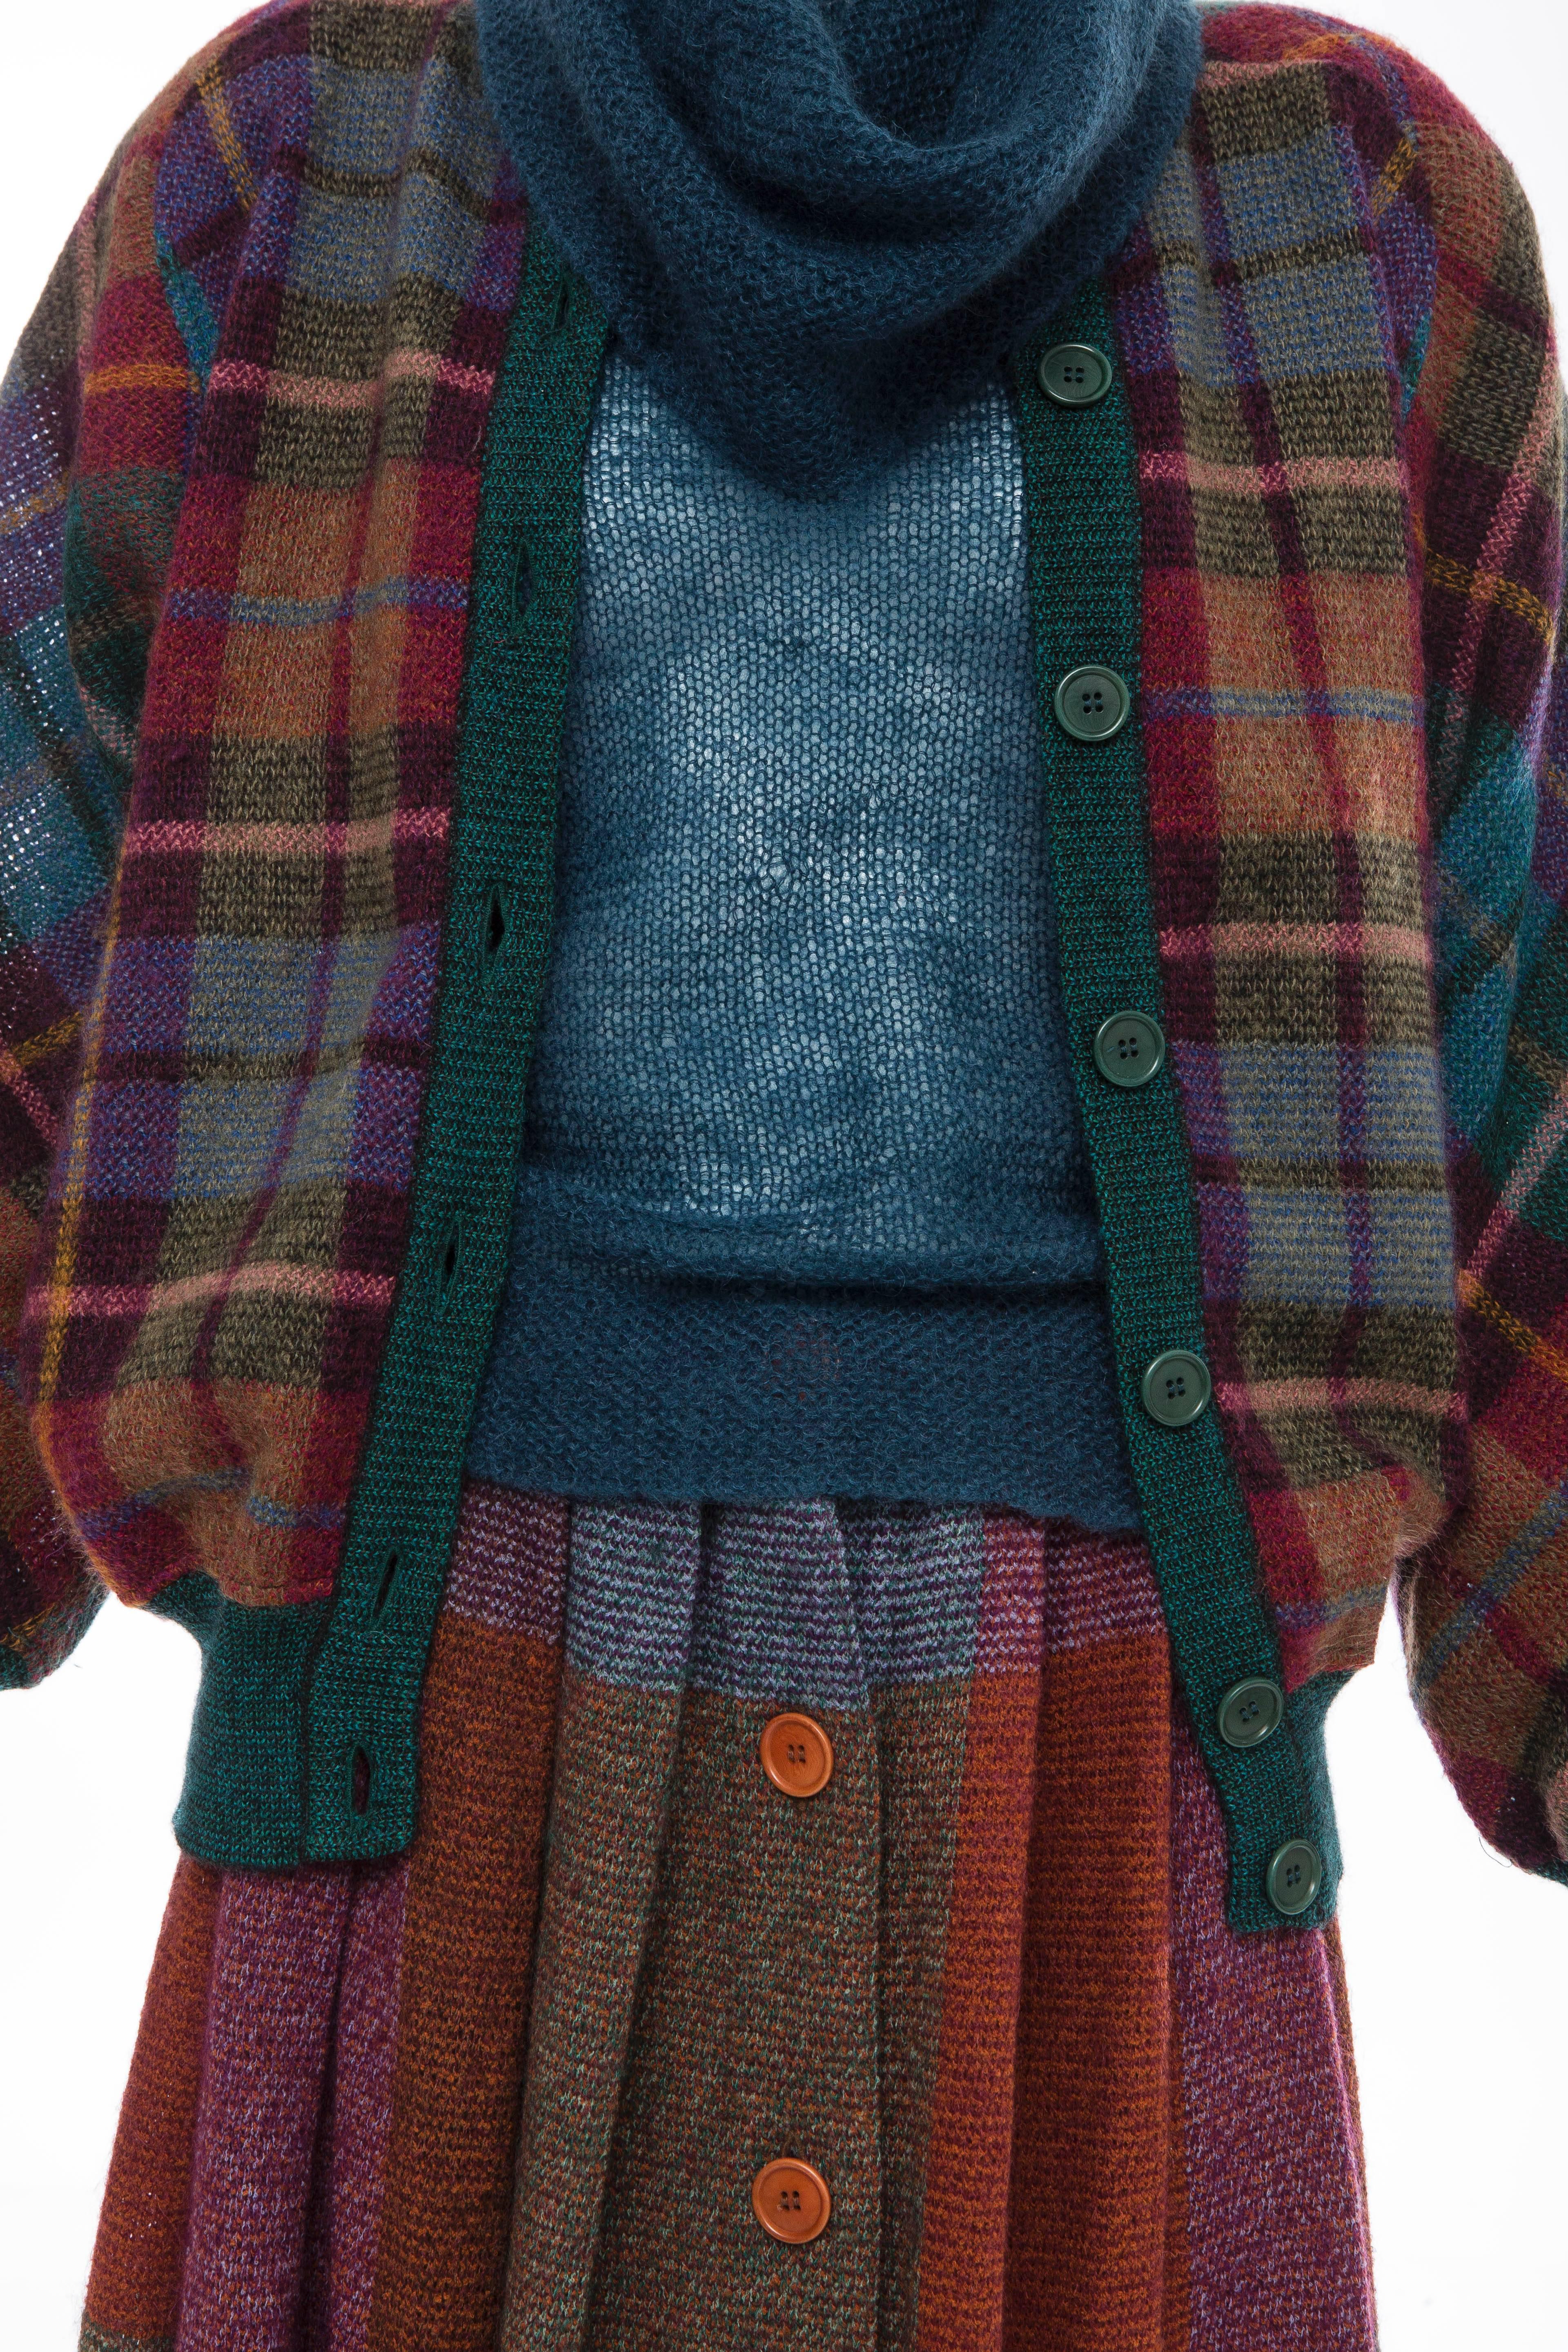 Missoni Knit Plaid Tweed Mohair Skirt Suit, Circa 1980's 1